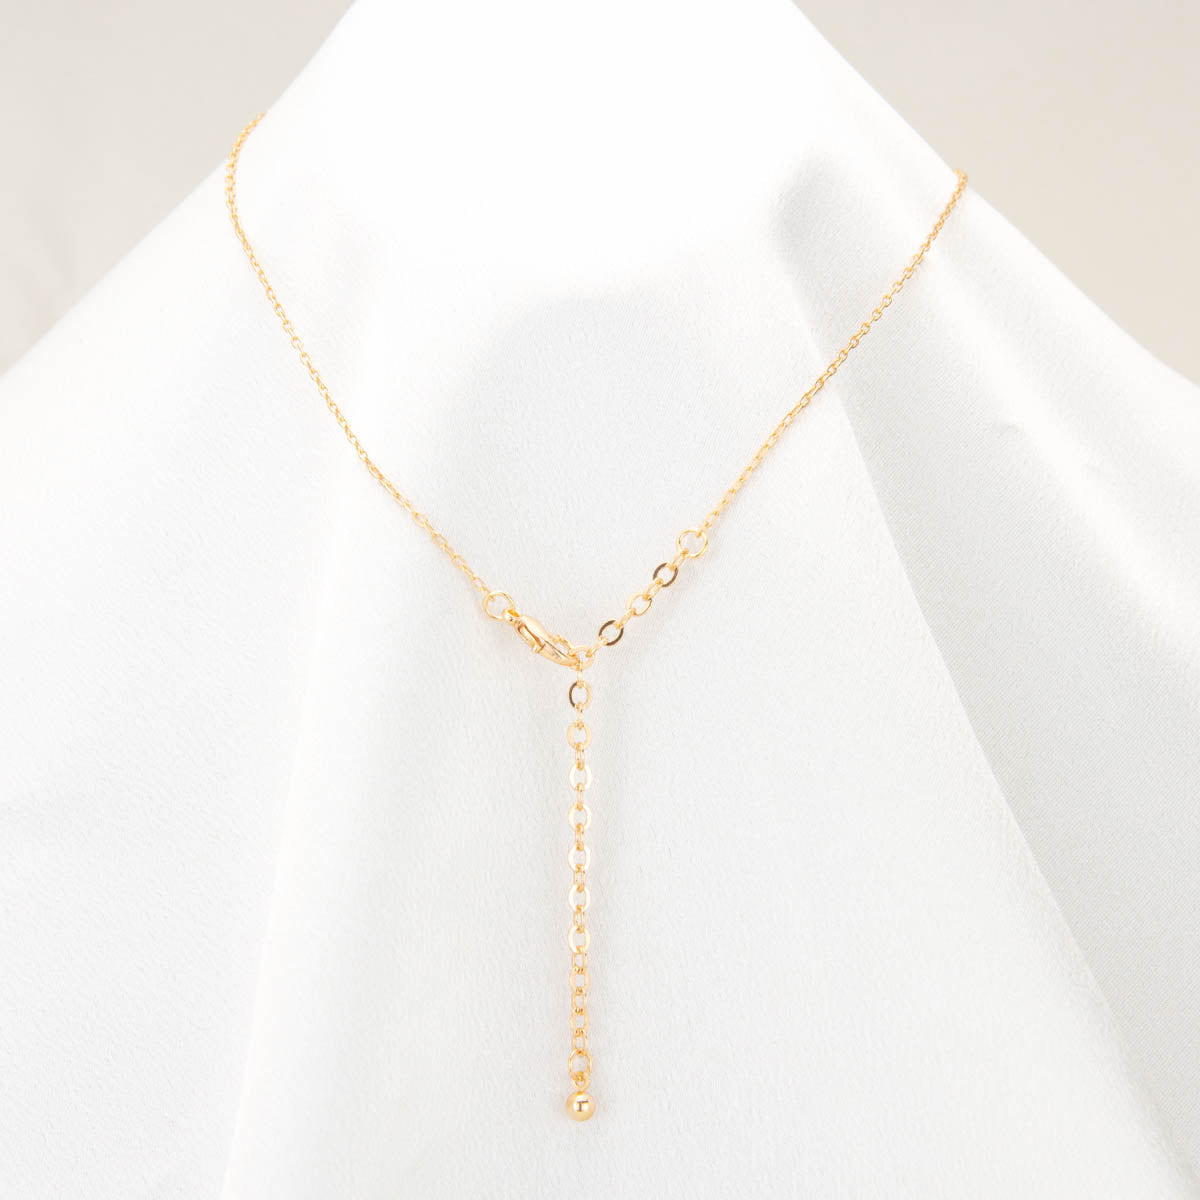 Necklaces- Royal Standard Devotion Heart Necklaces Gold/Clear